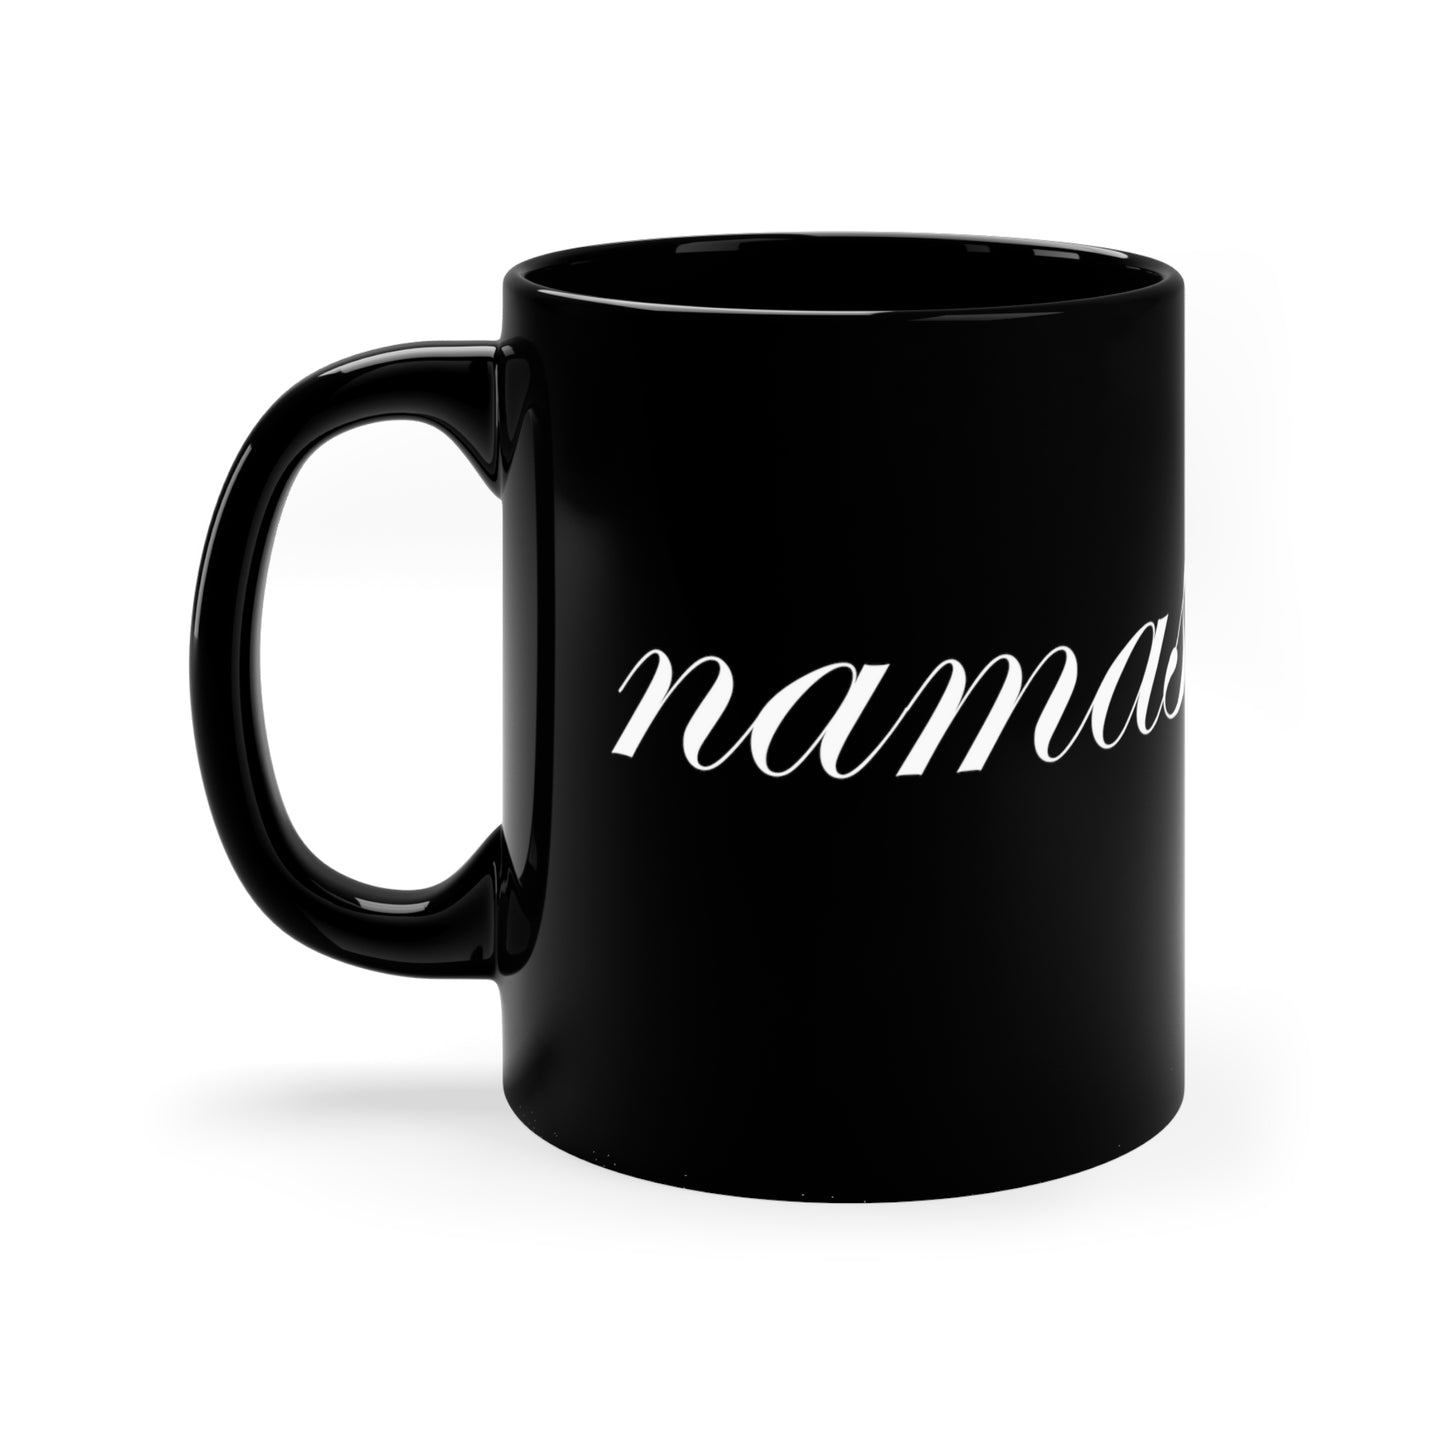 Black Namaste Black Coffee Mug 11oz